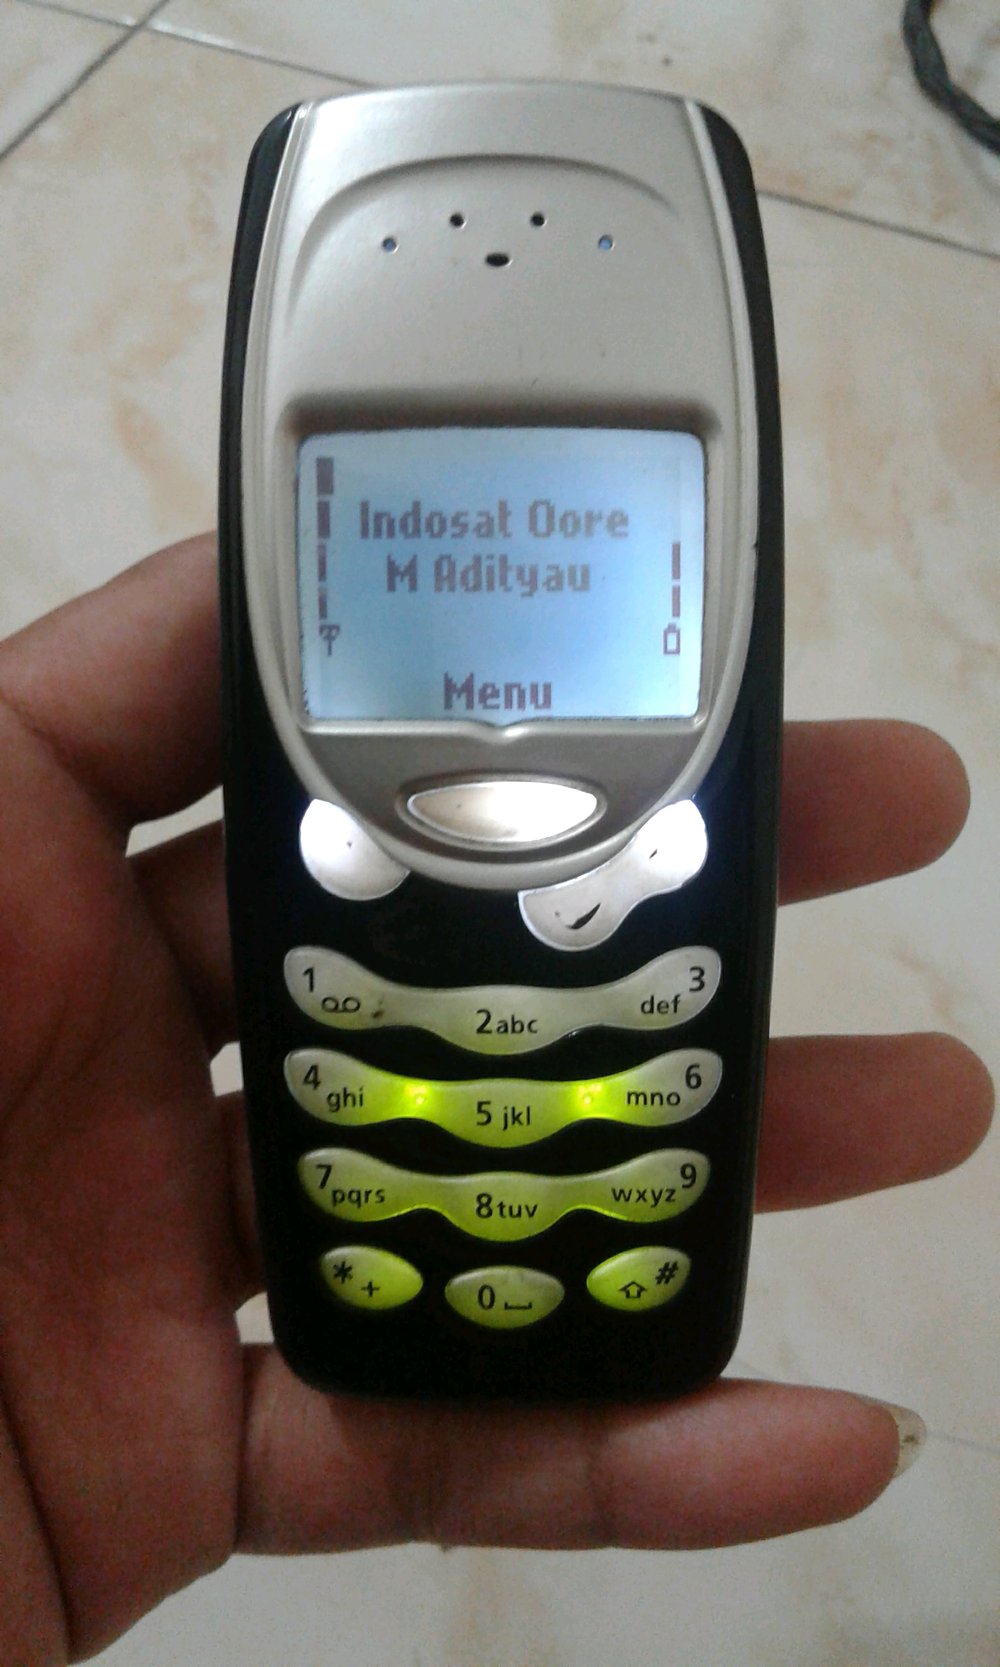 Nokia 3310 Jadul - Feature Phone - 1000x1667 Wallpaper 